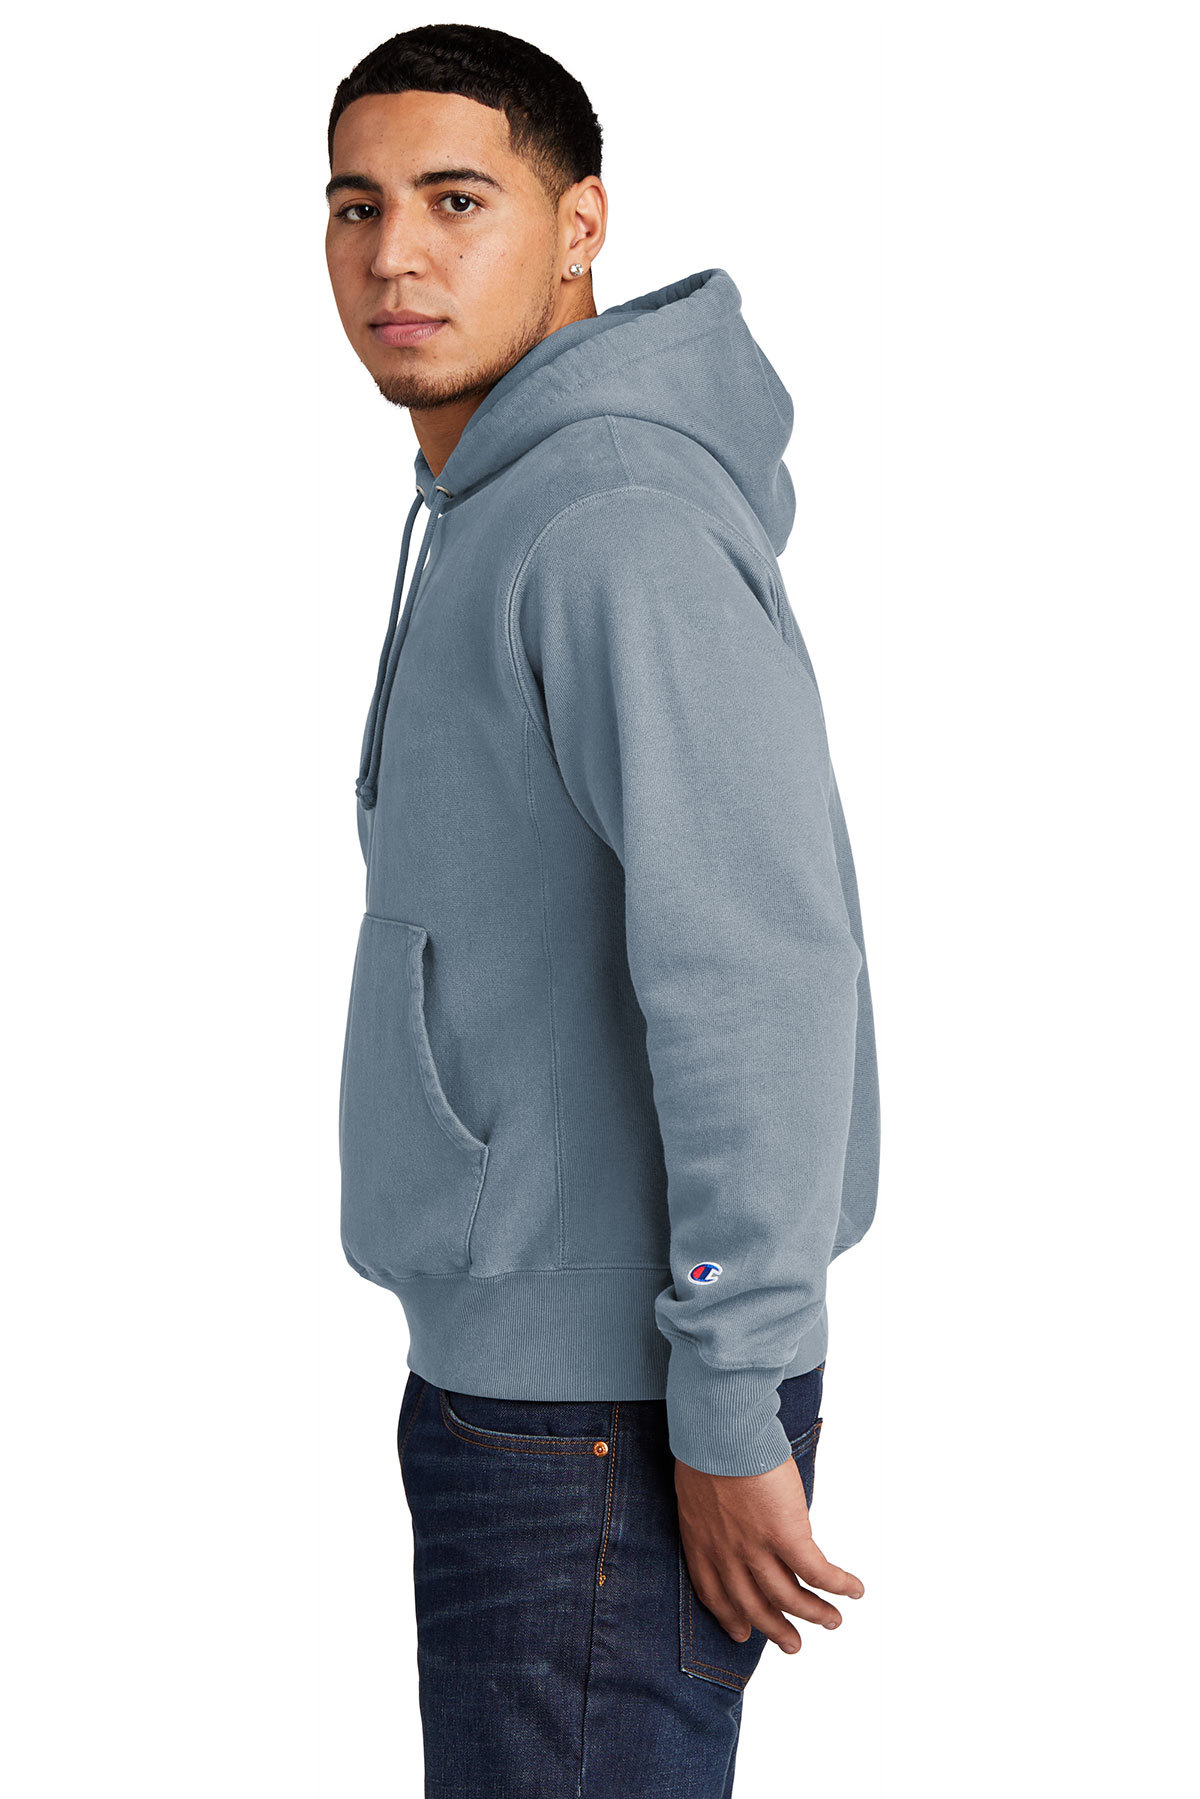 Champion Reverse Weave Garment-Dyed Hooded Sweatshirt | Product | SanMar